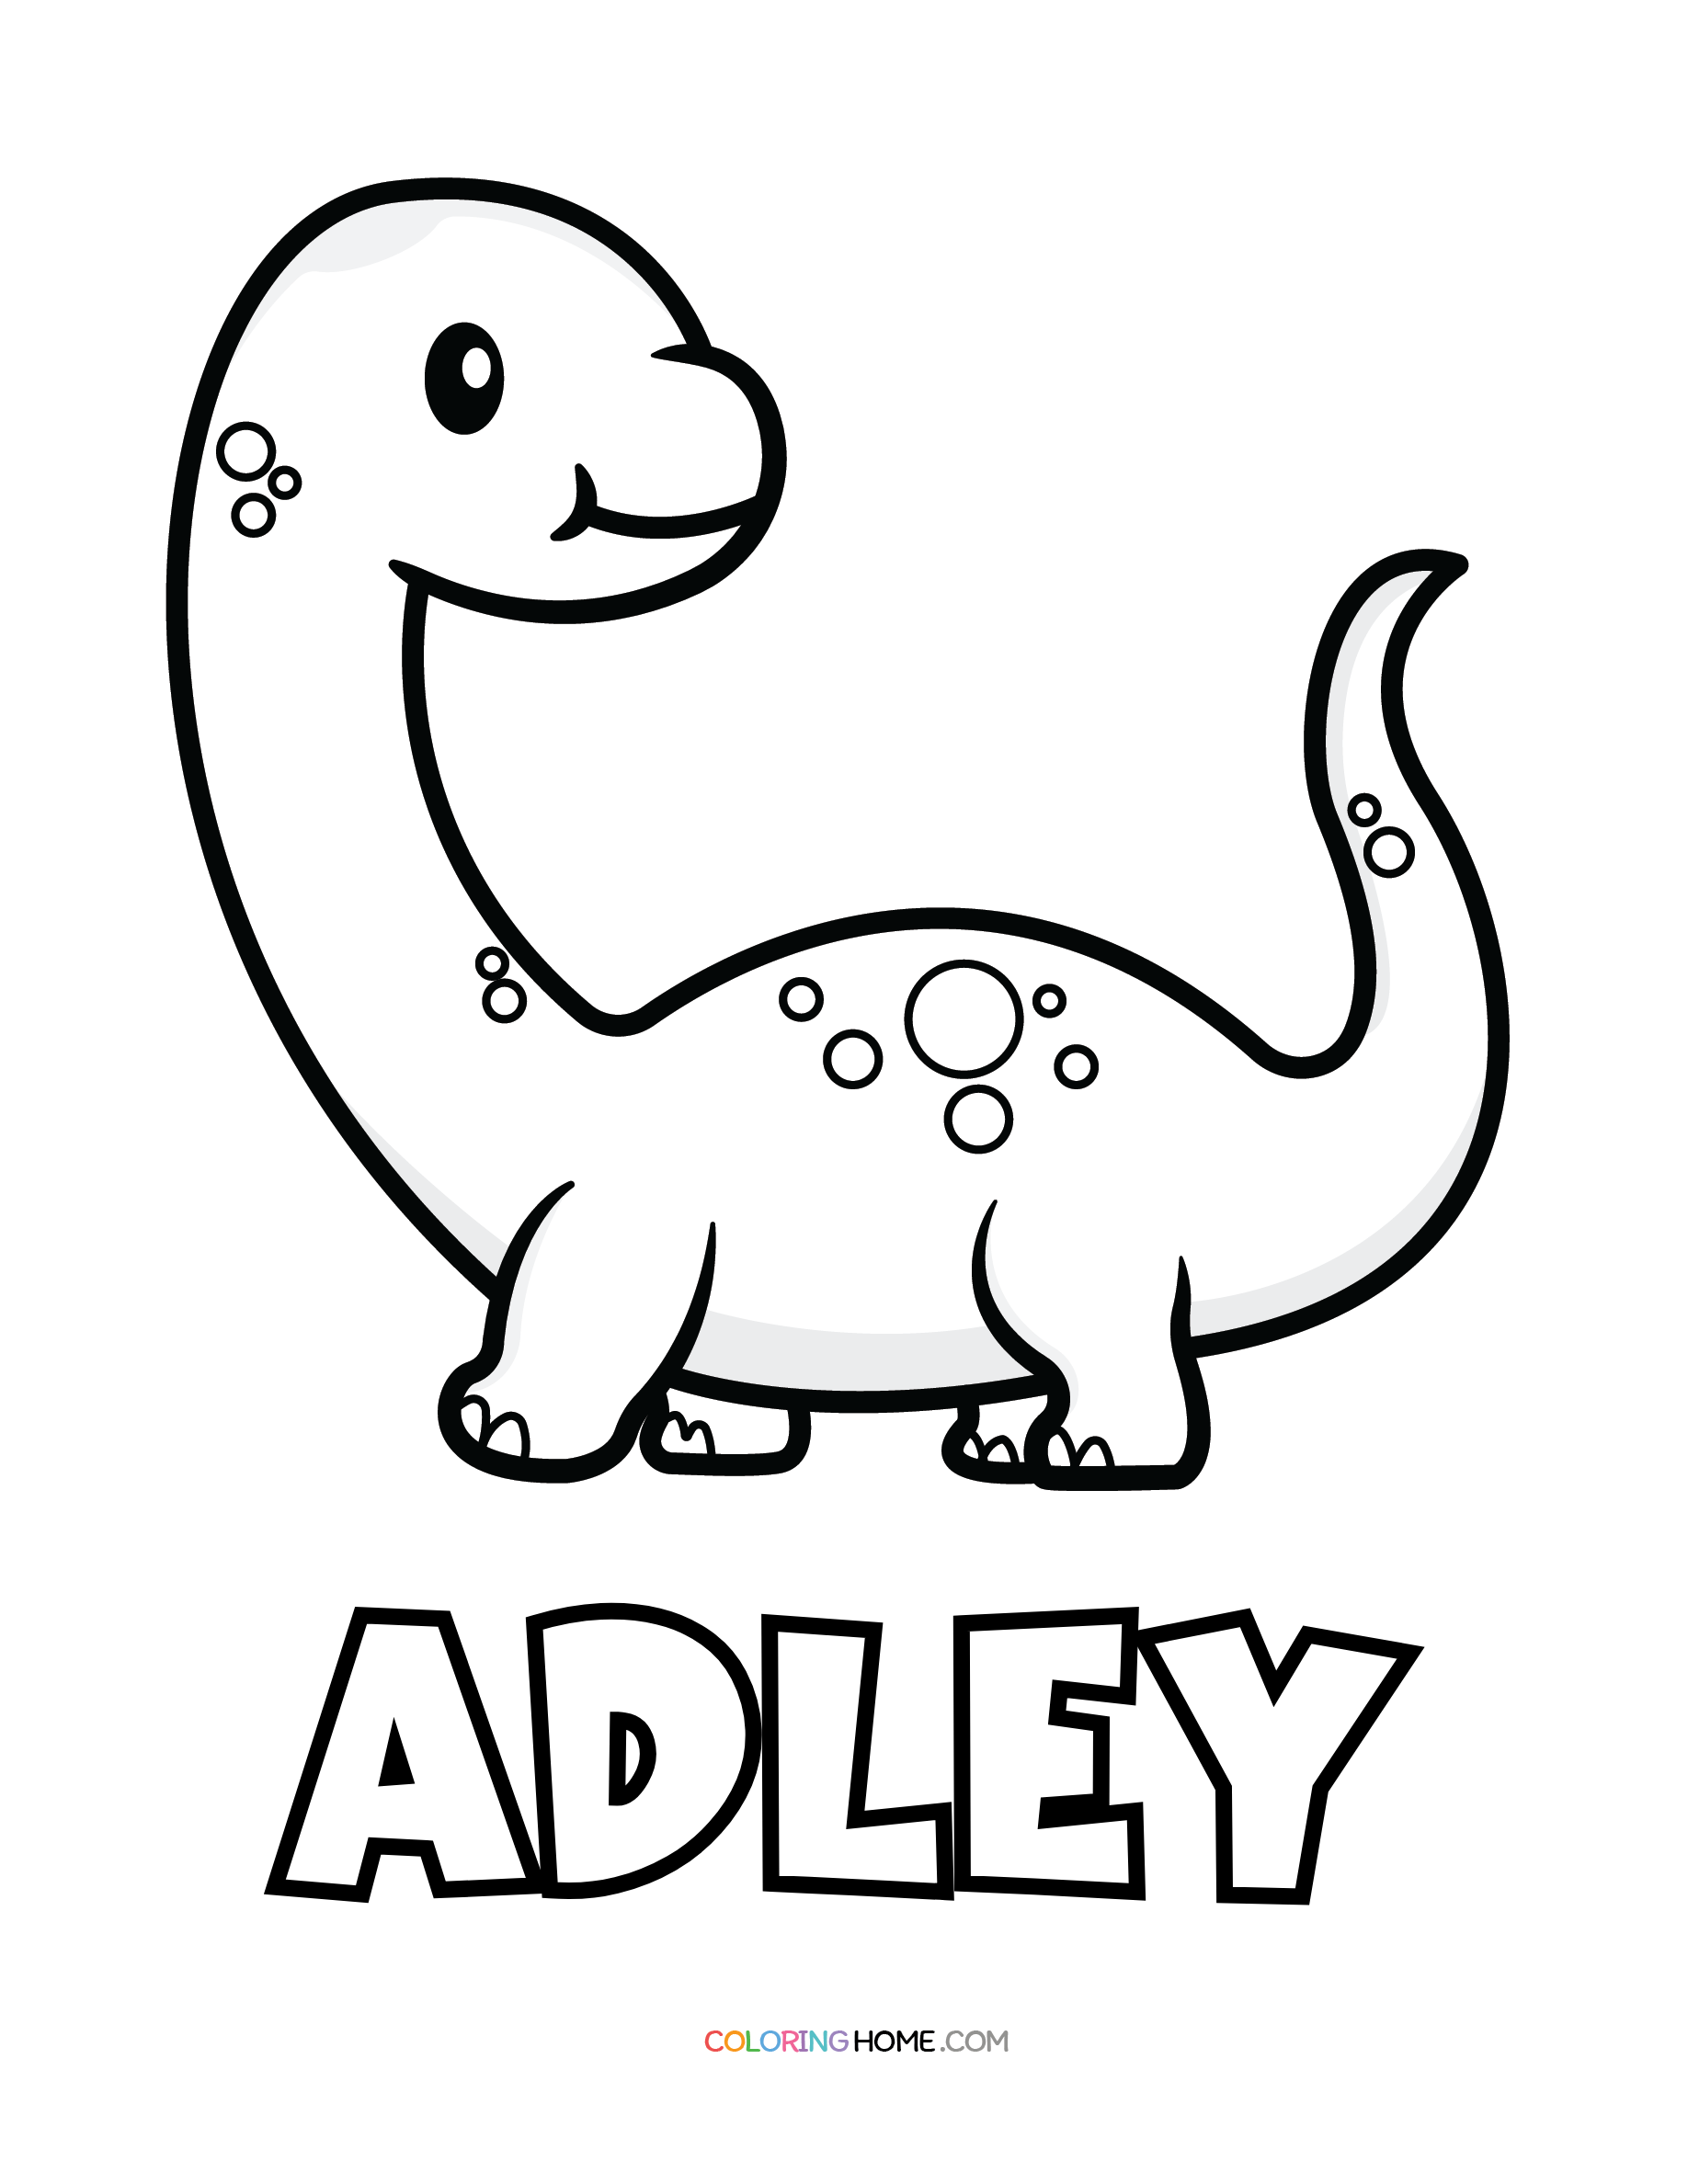 Adley dinosaur coloring page